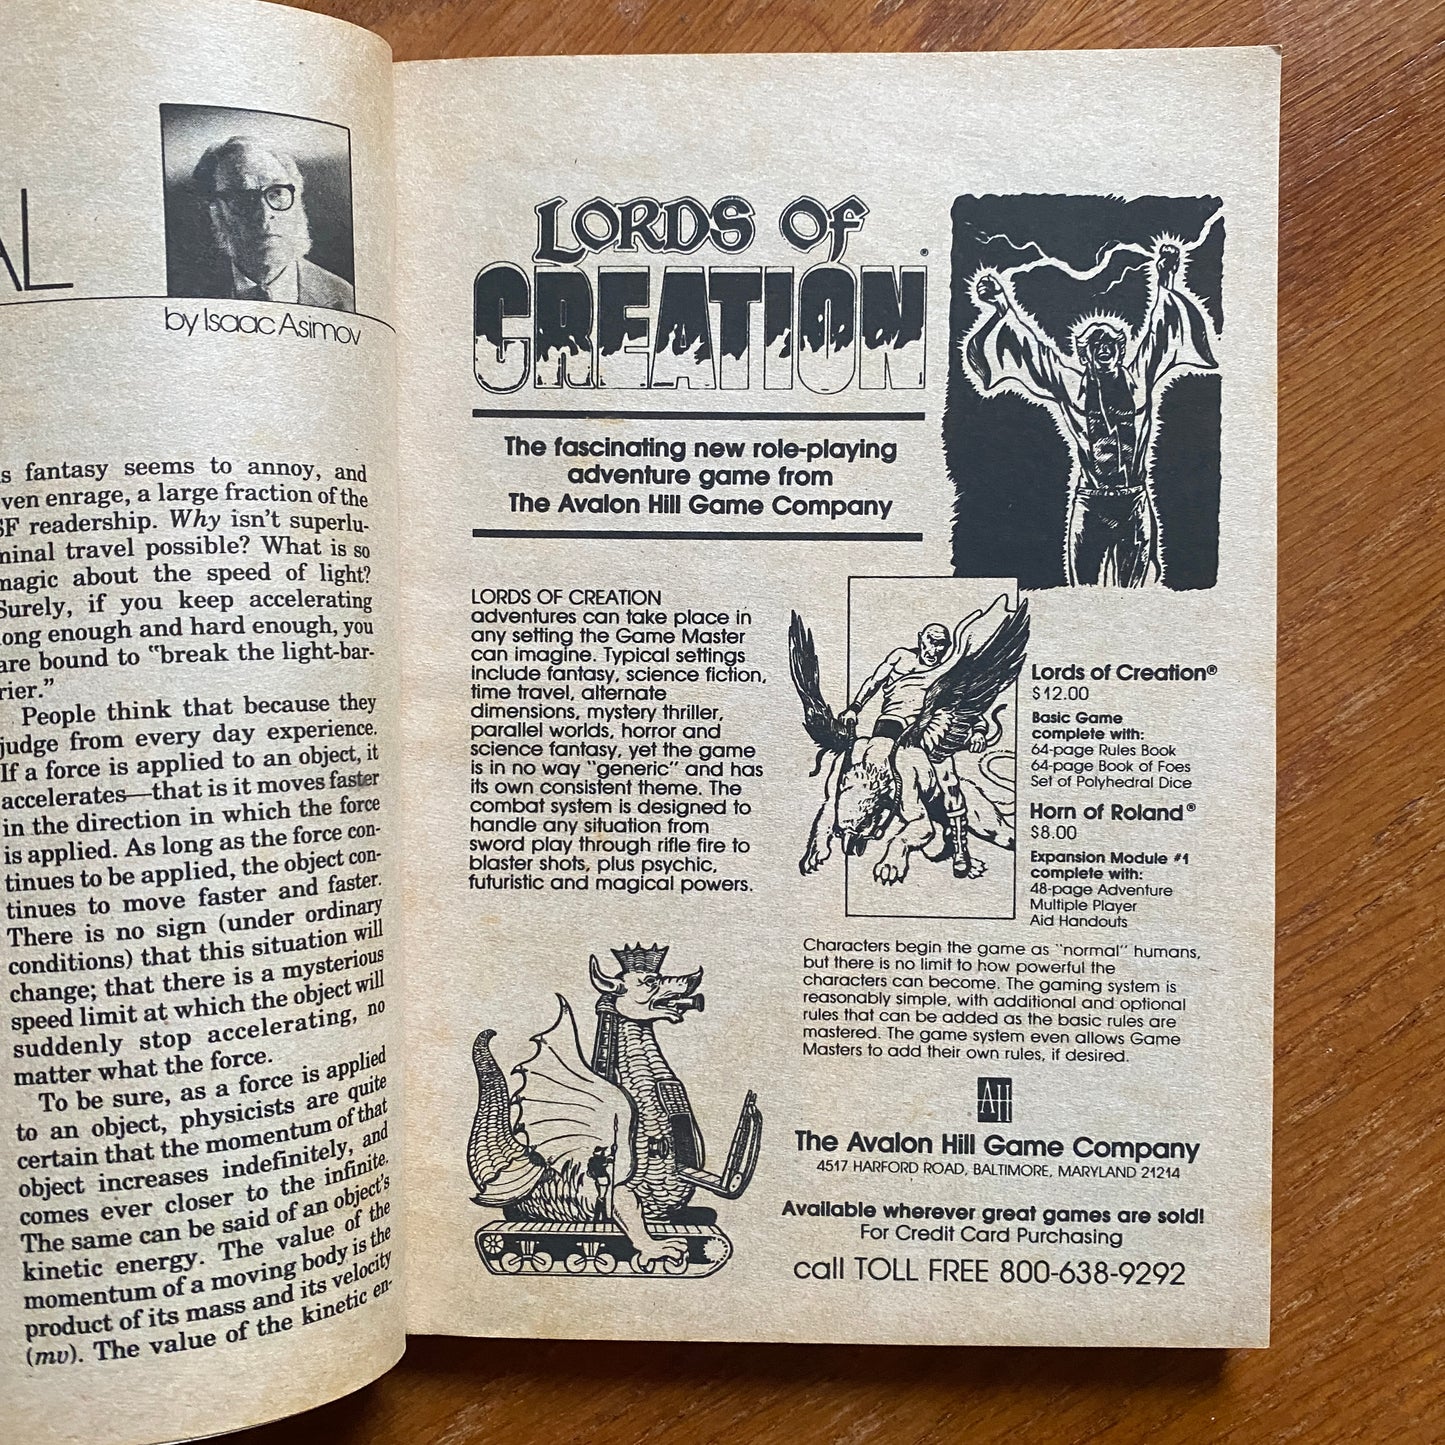 Asimov's Science Fiction Nov '84